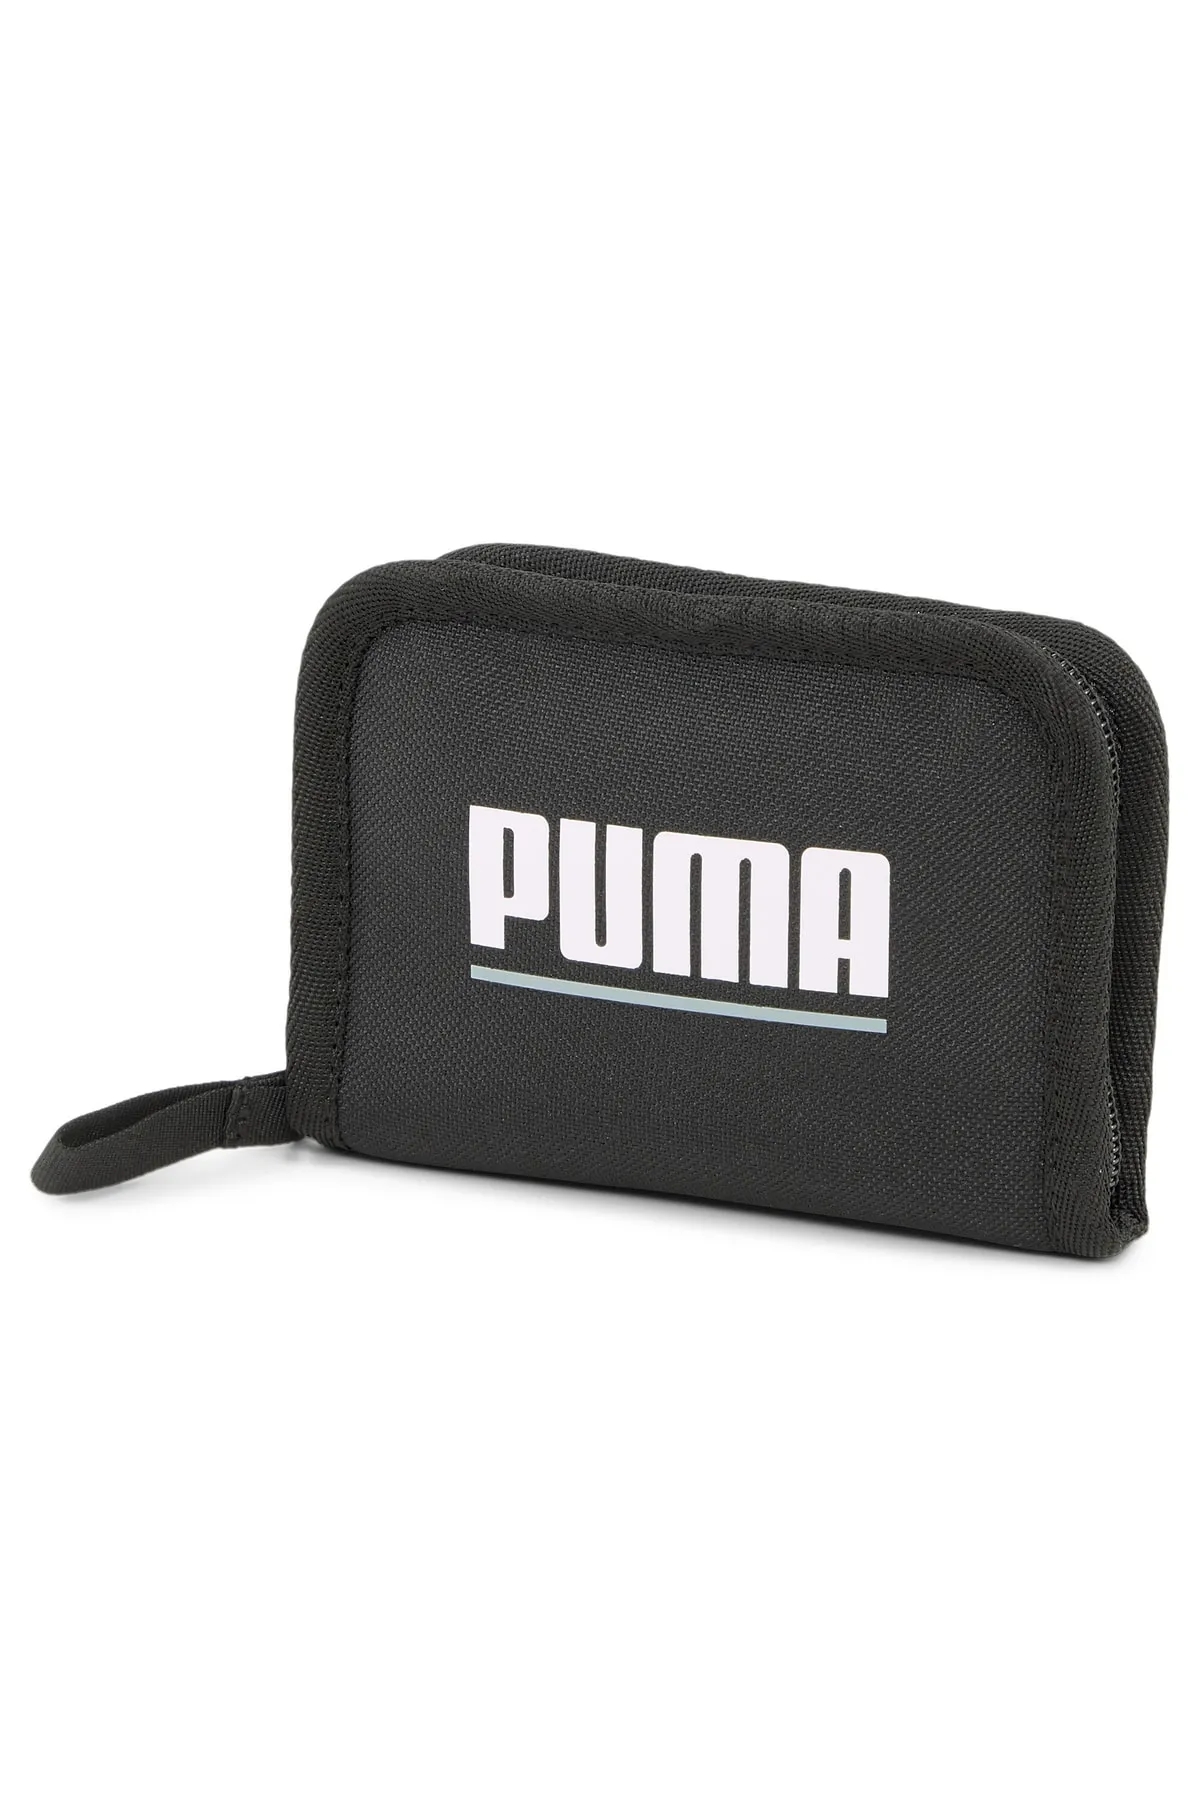 PUMA - Plus Wallet Cüzdan 079616-Siyah